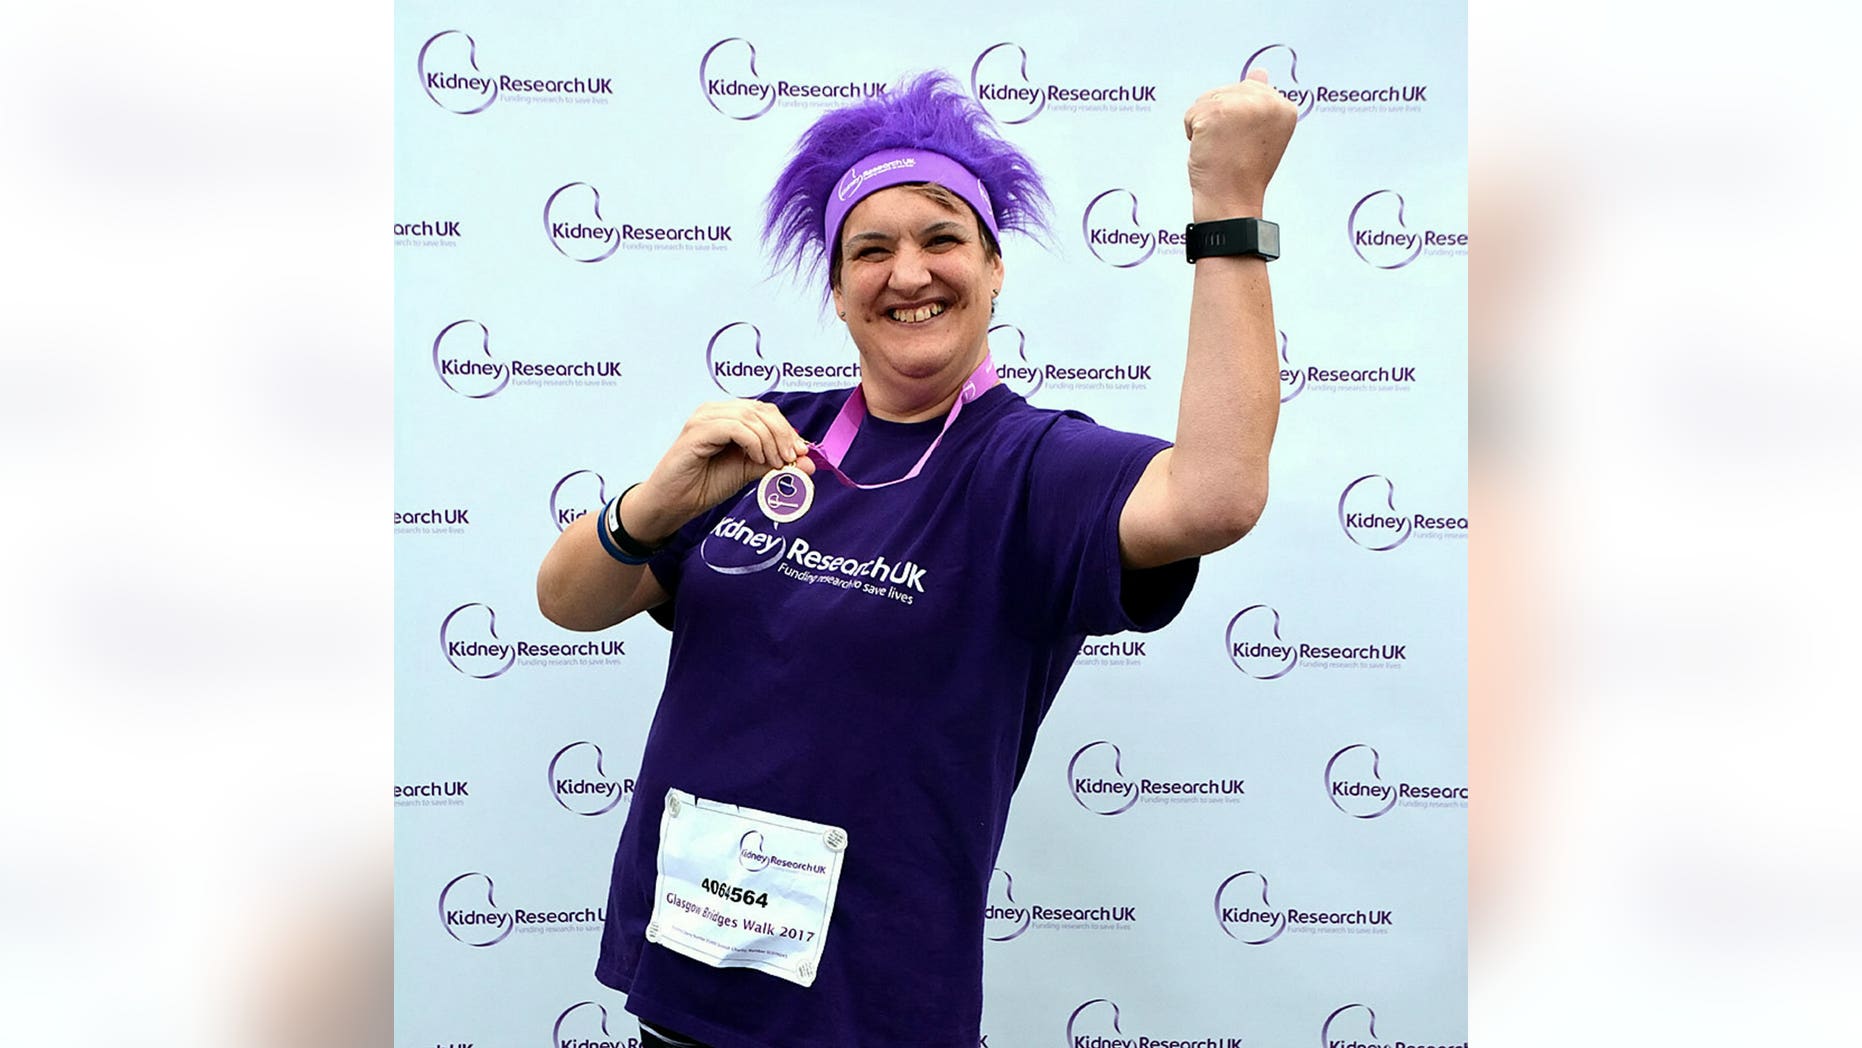 Nurse training for London Marathon after donating kidney to stranger